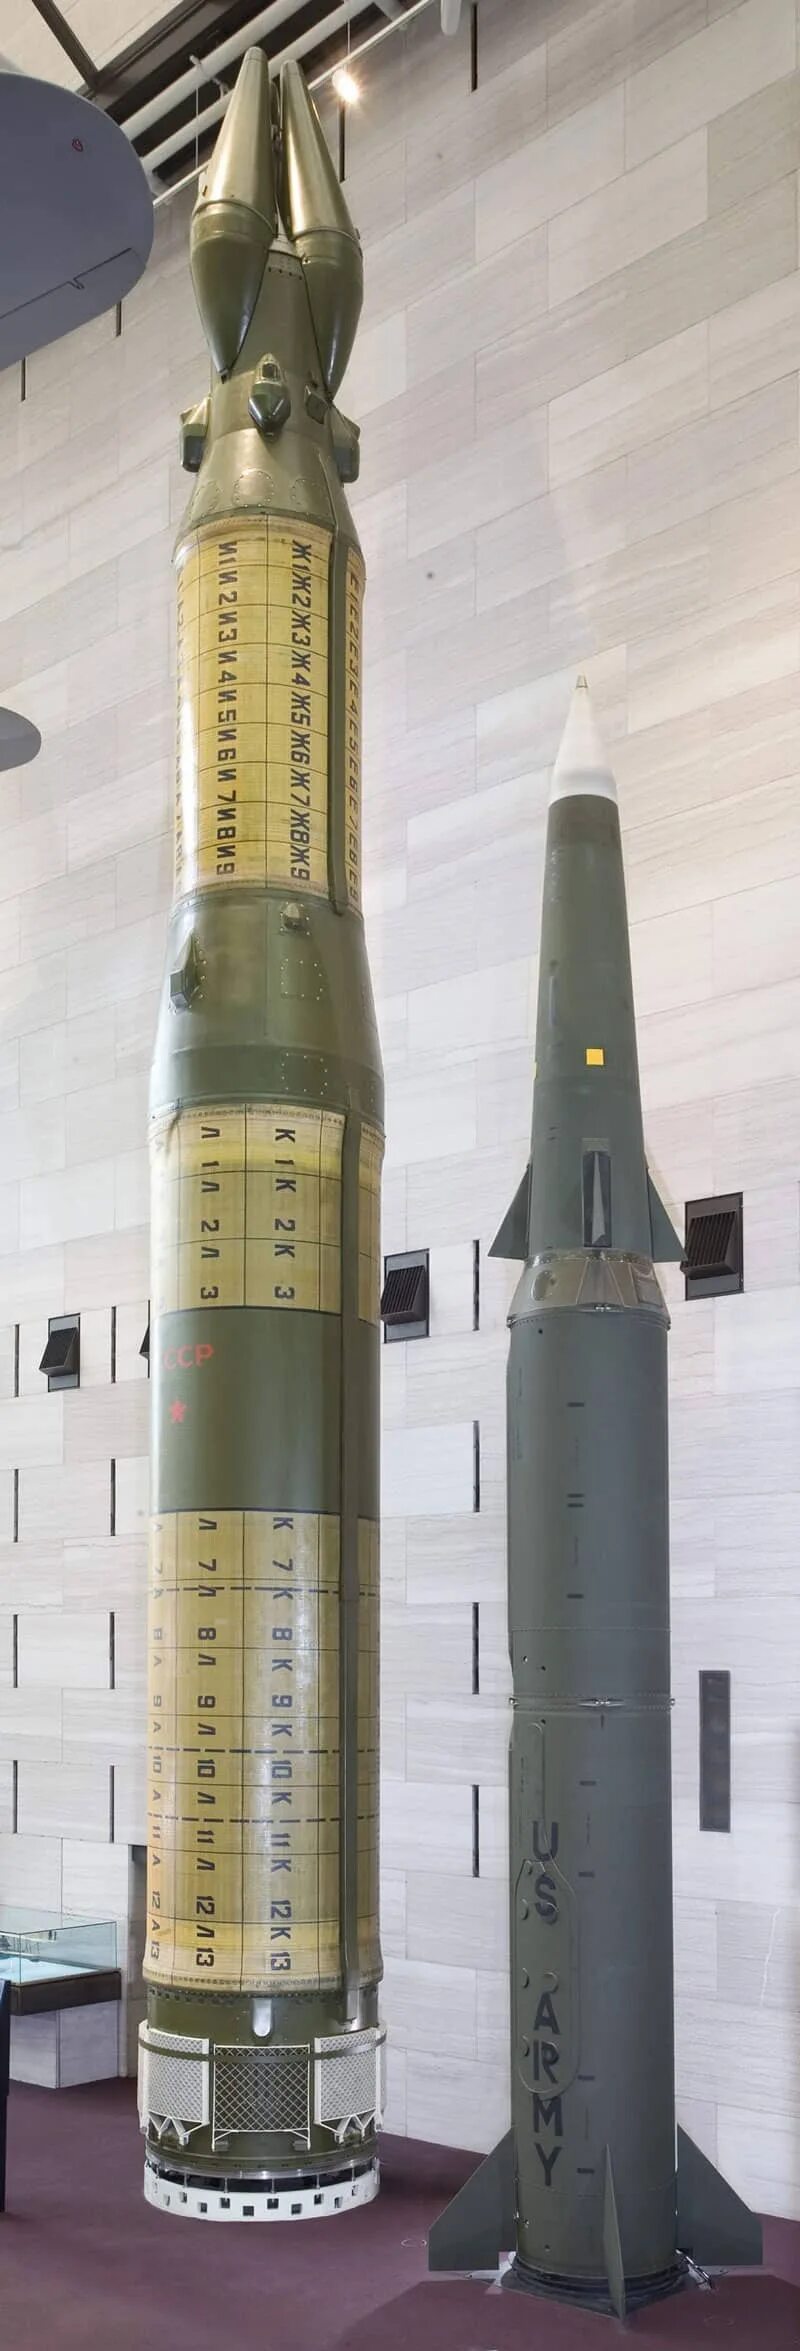 Ракета сс. Ракета РСД-10 Пионер. Пионер СС 20. РСД-10 ядерное оружие. Першинг 2.